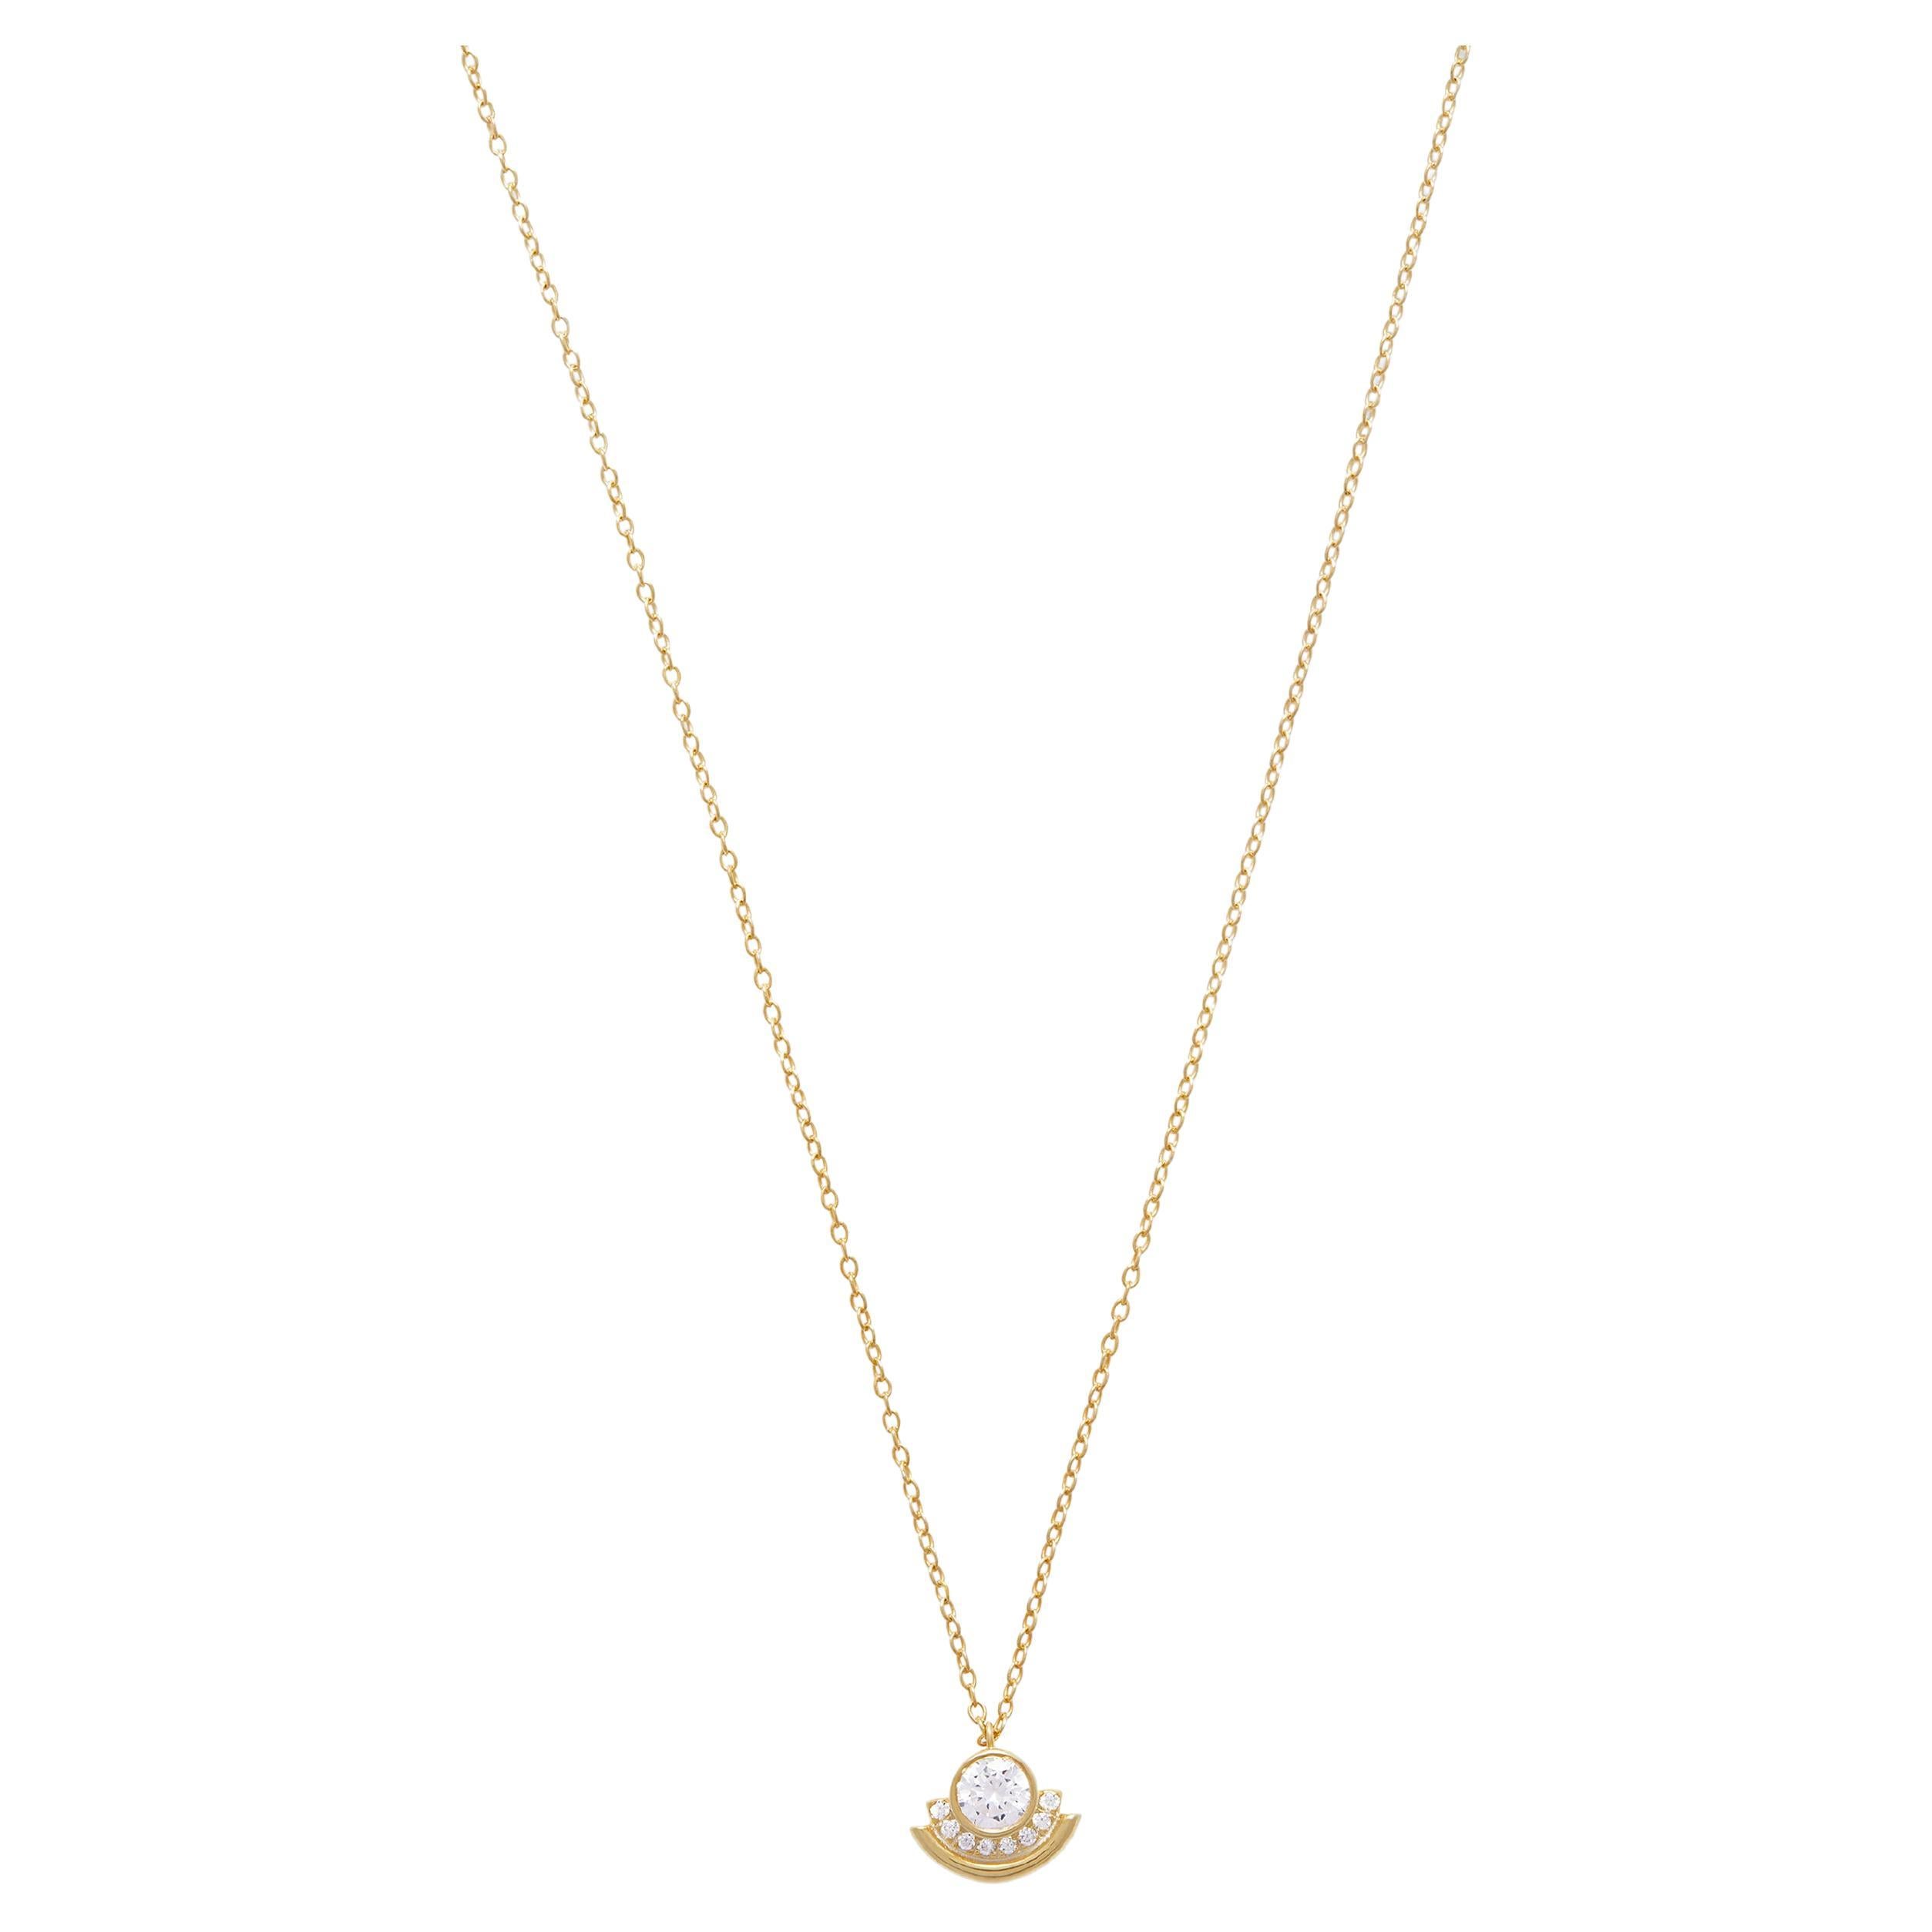 Casey Perez 18K Gold Arc Necklace with .8 carats of Brilliant Cut Diamonds